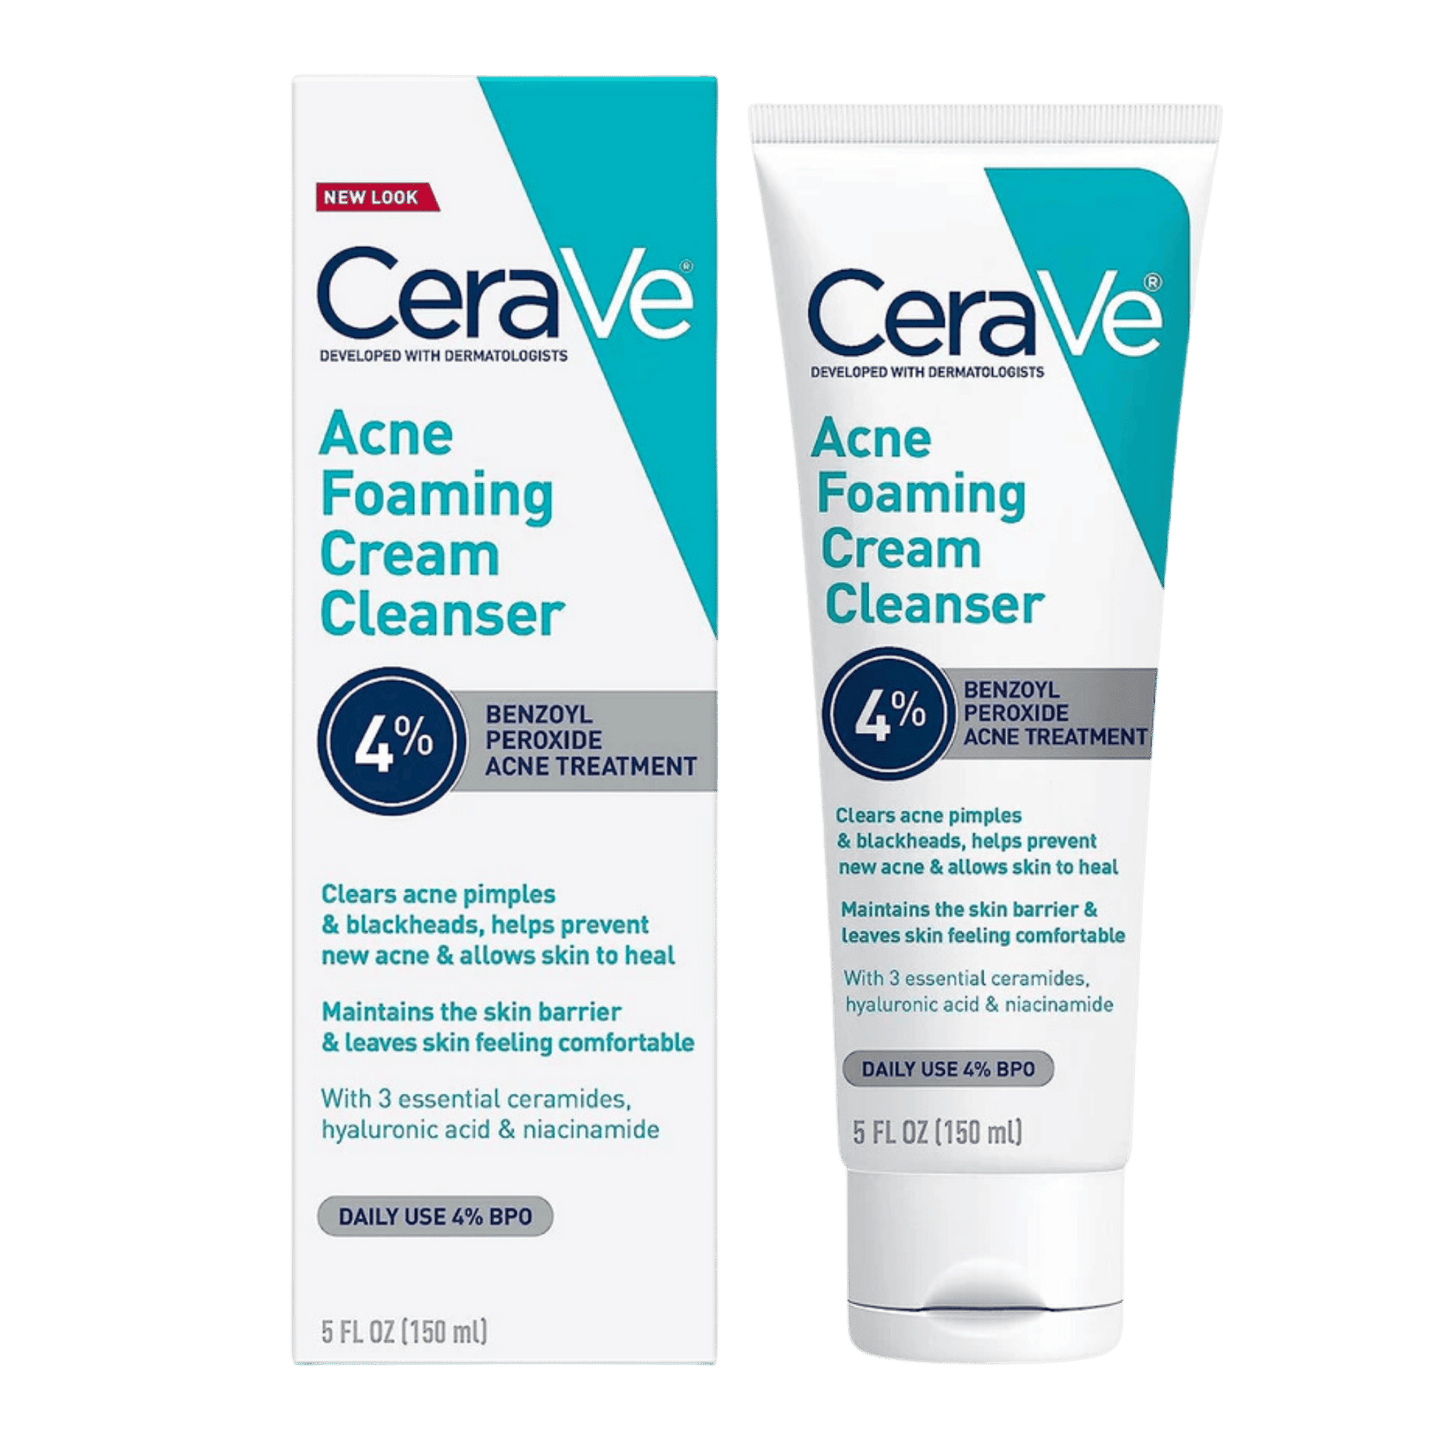 Cerave Acne Foaming Cream Cleanser 4% (150ml)